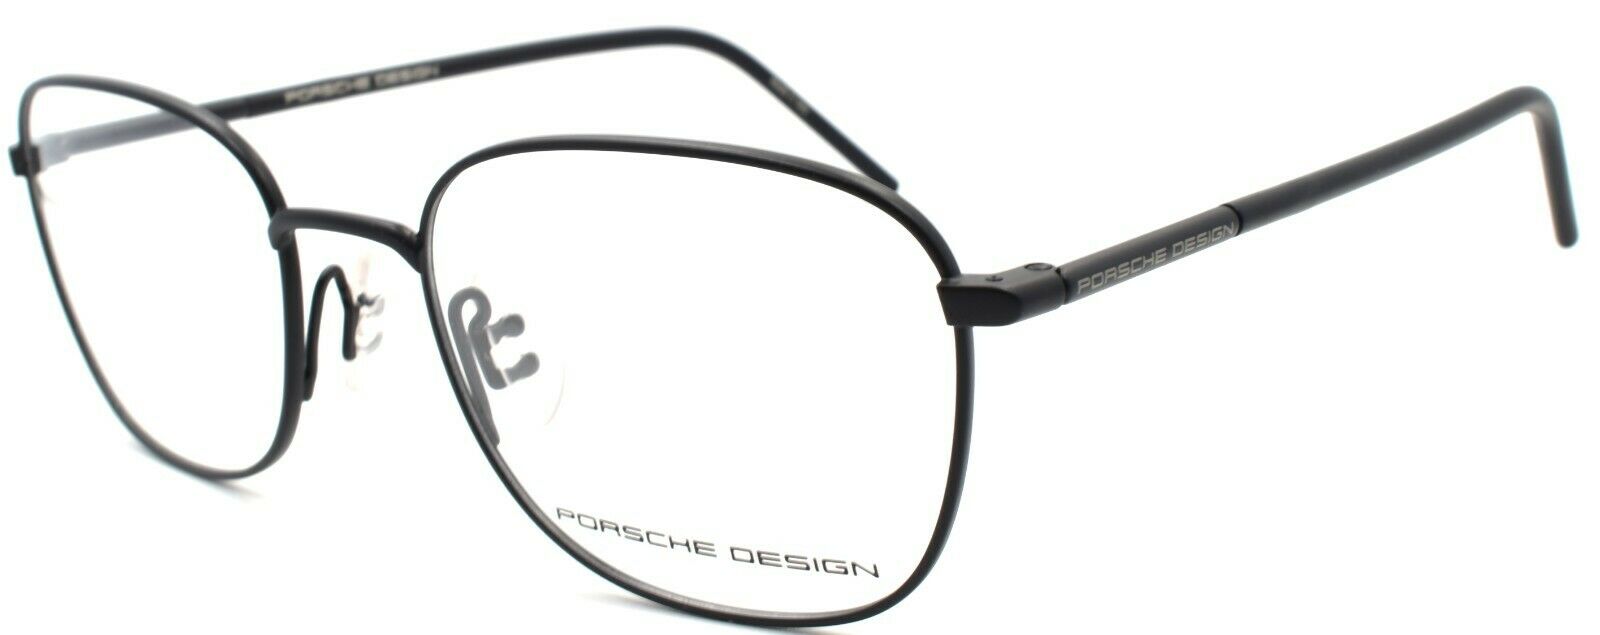 1-Porsche Design P8331 A Men's Eyeglasses Frames 51-18-140 Black-4046901647766-IKSpecs